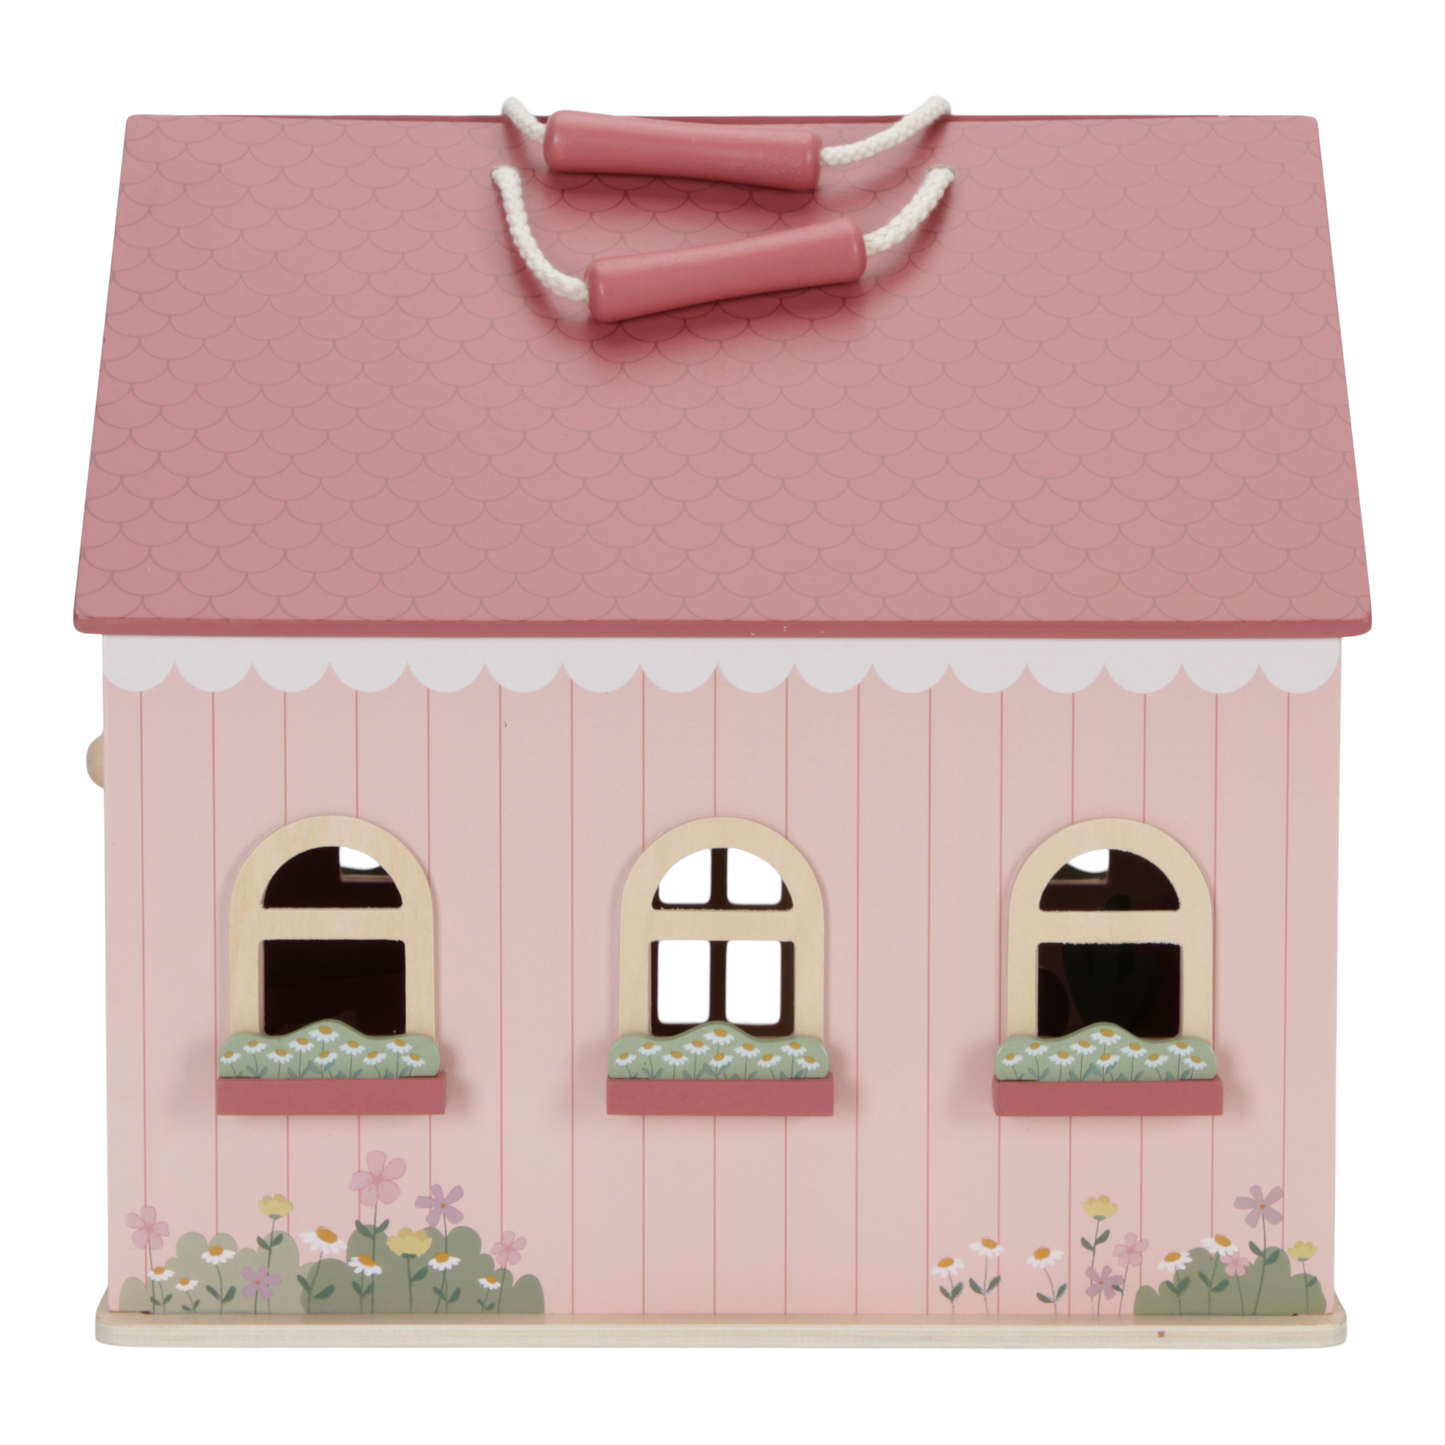 Wooden Portable Dollhouse By Little Dutch